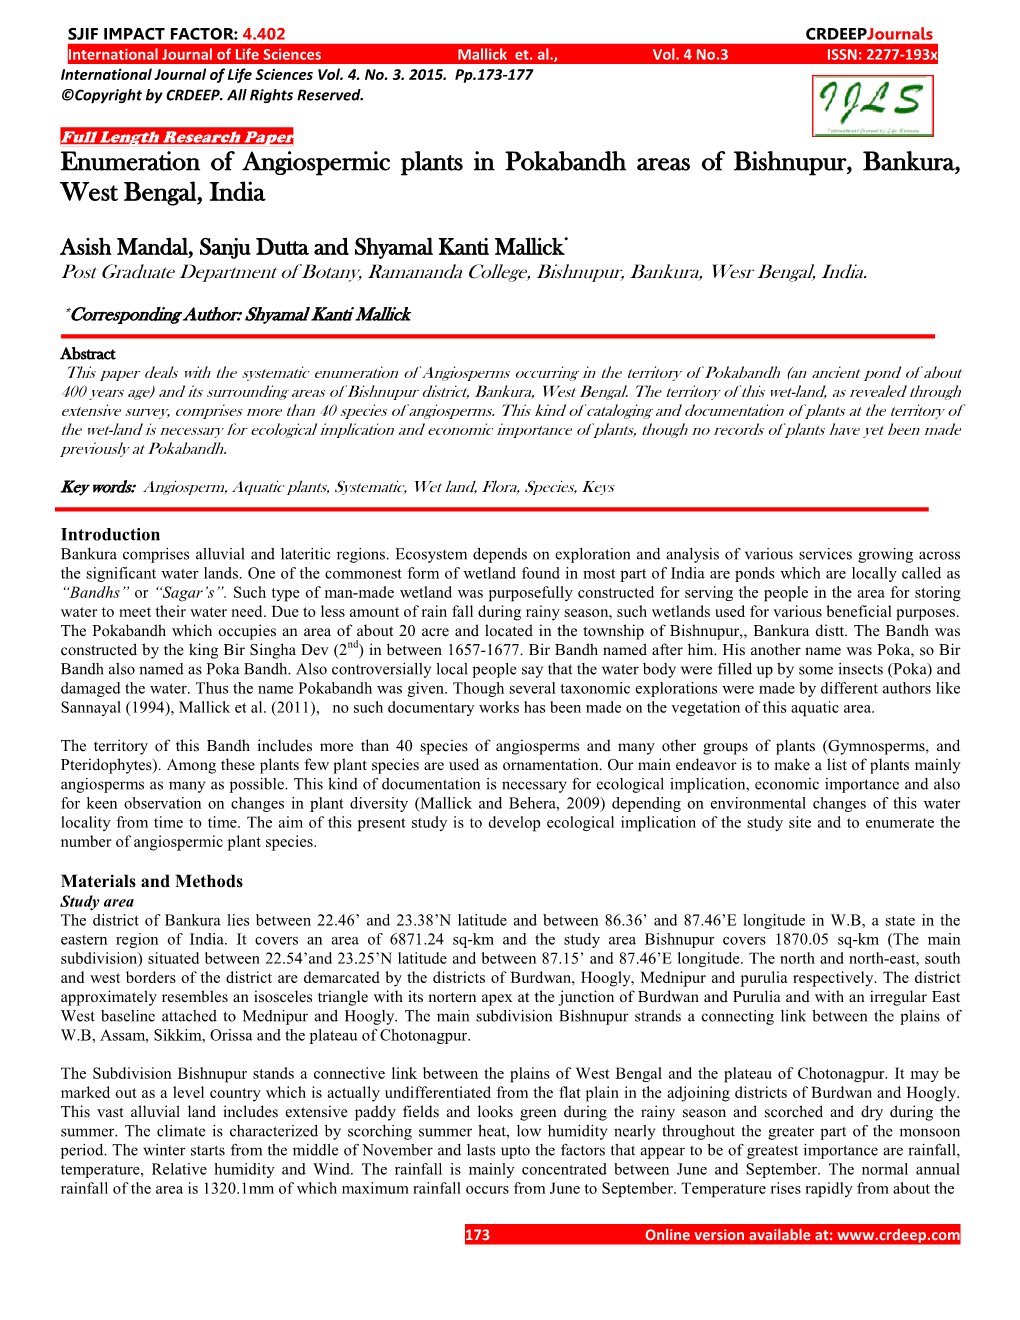 Enumeration of Angiospermic Plants in Pokabandh Areas of Bishnupur, Bankura, West Bengal, India